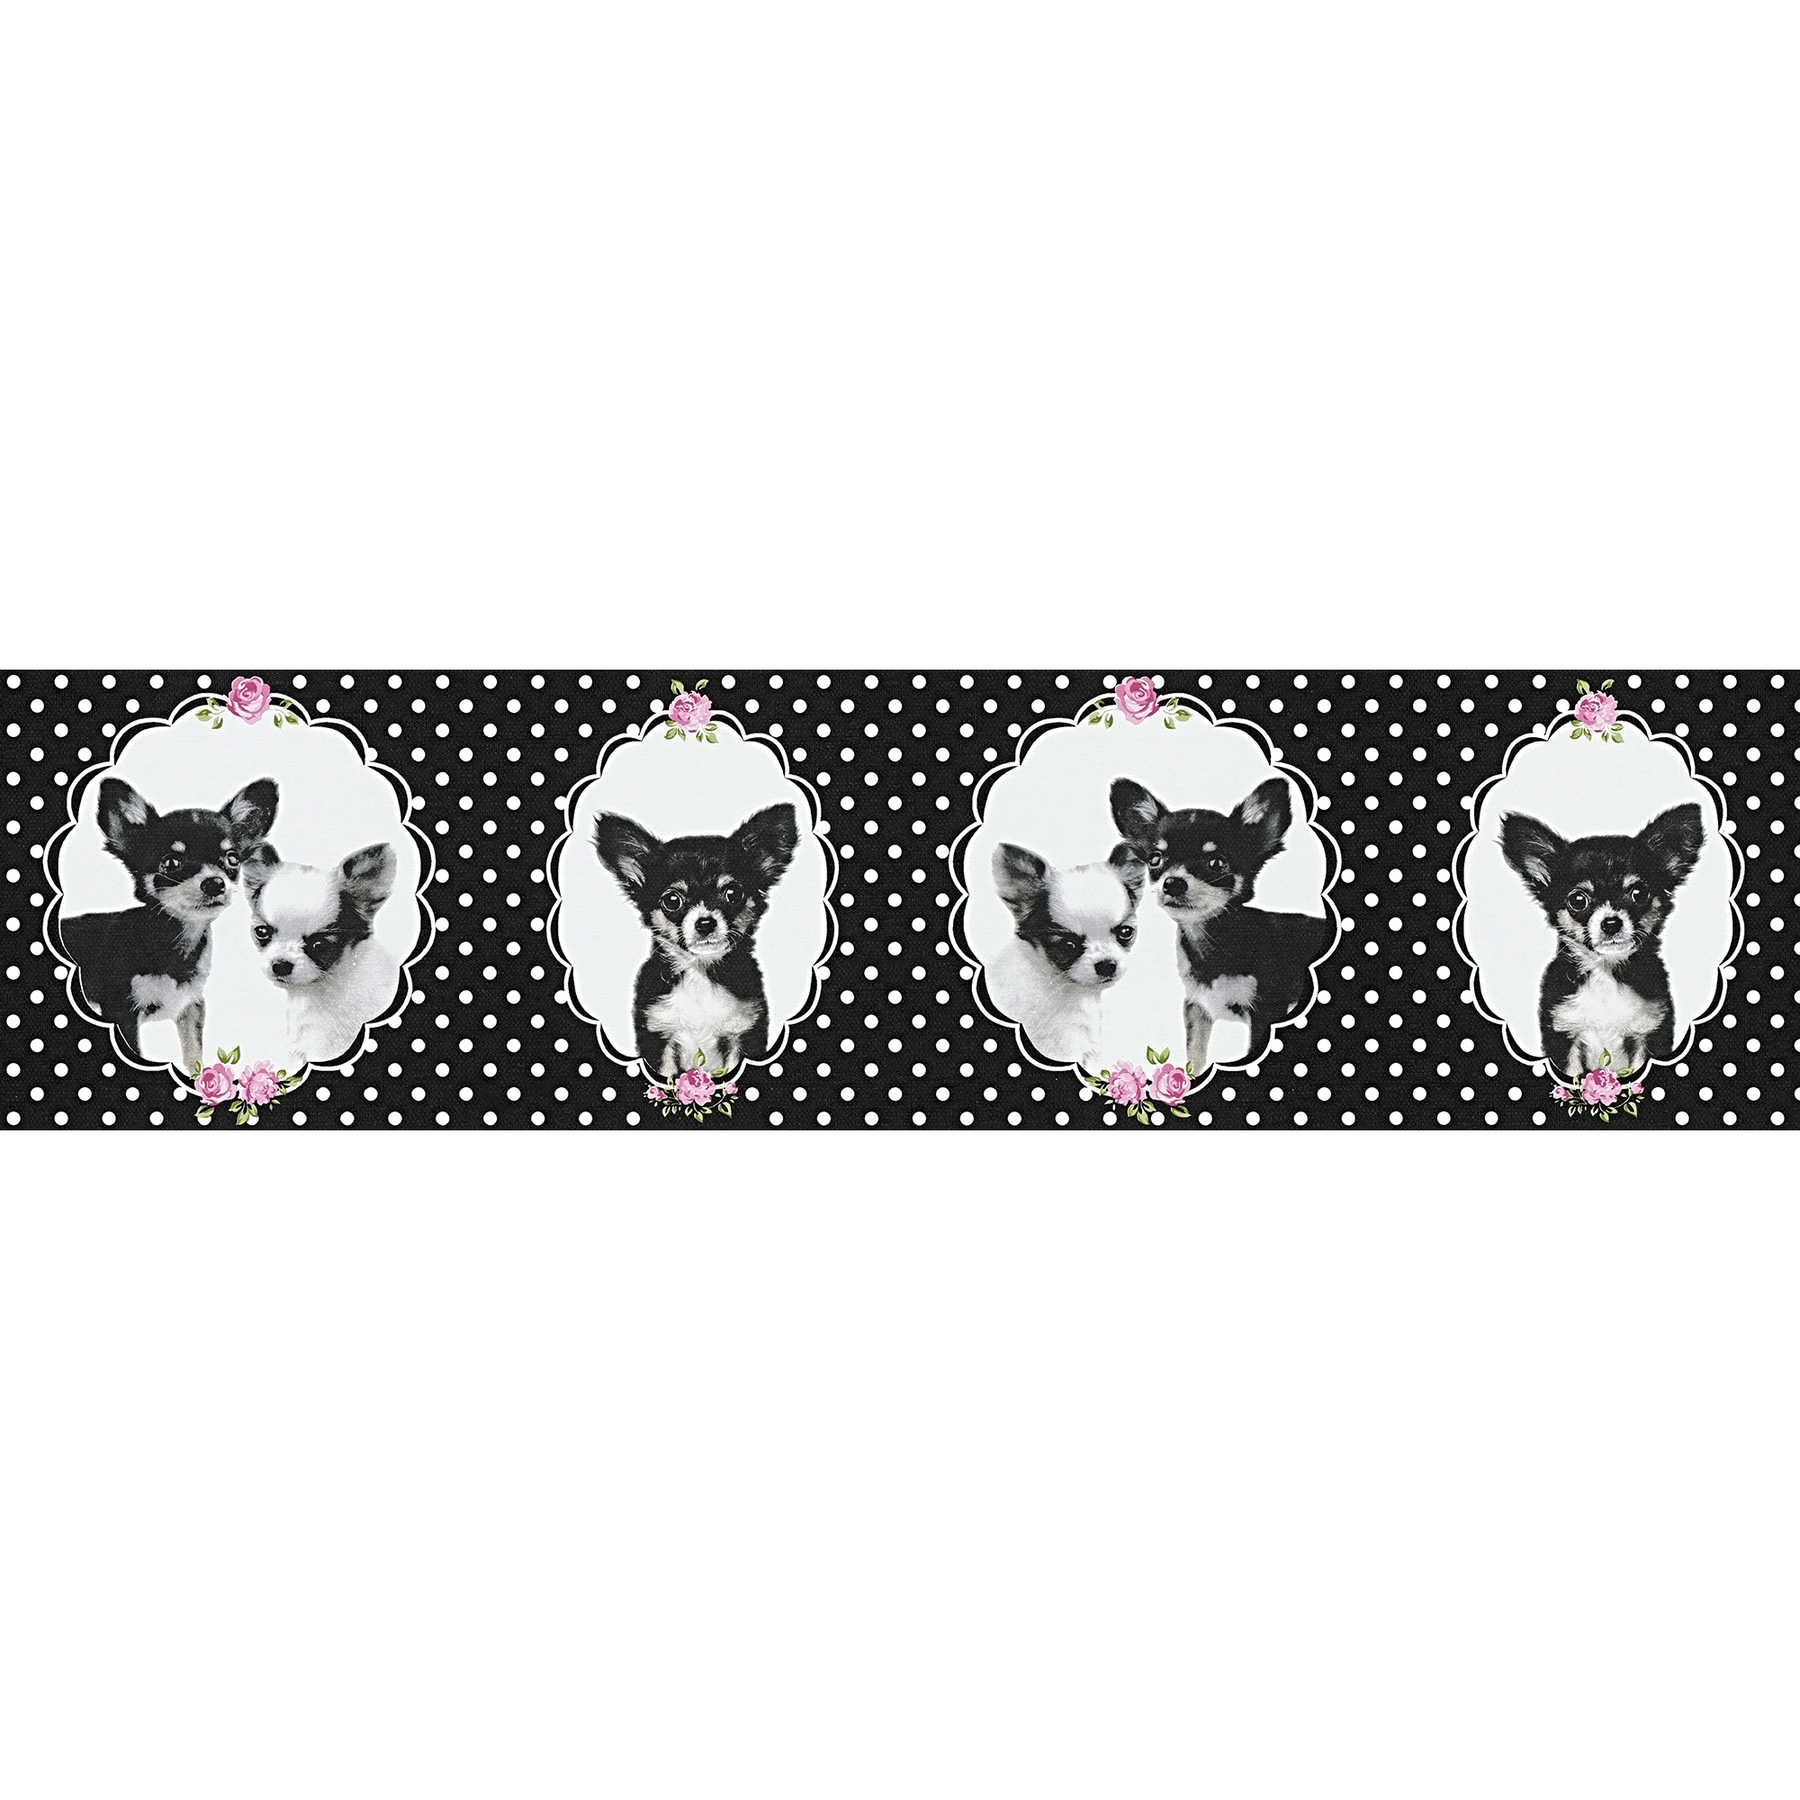 Nursery wallpaper border dog puppies & dots - Black
